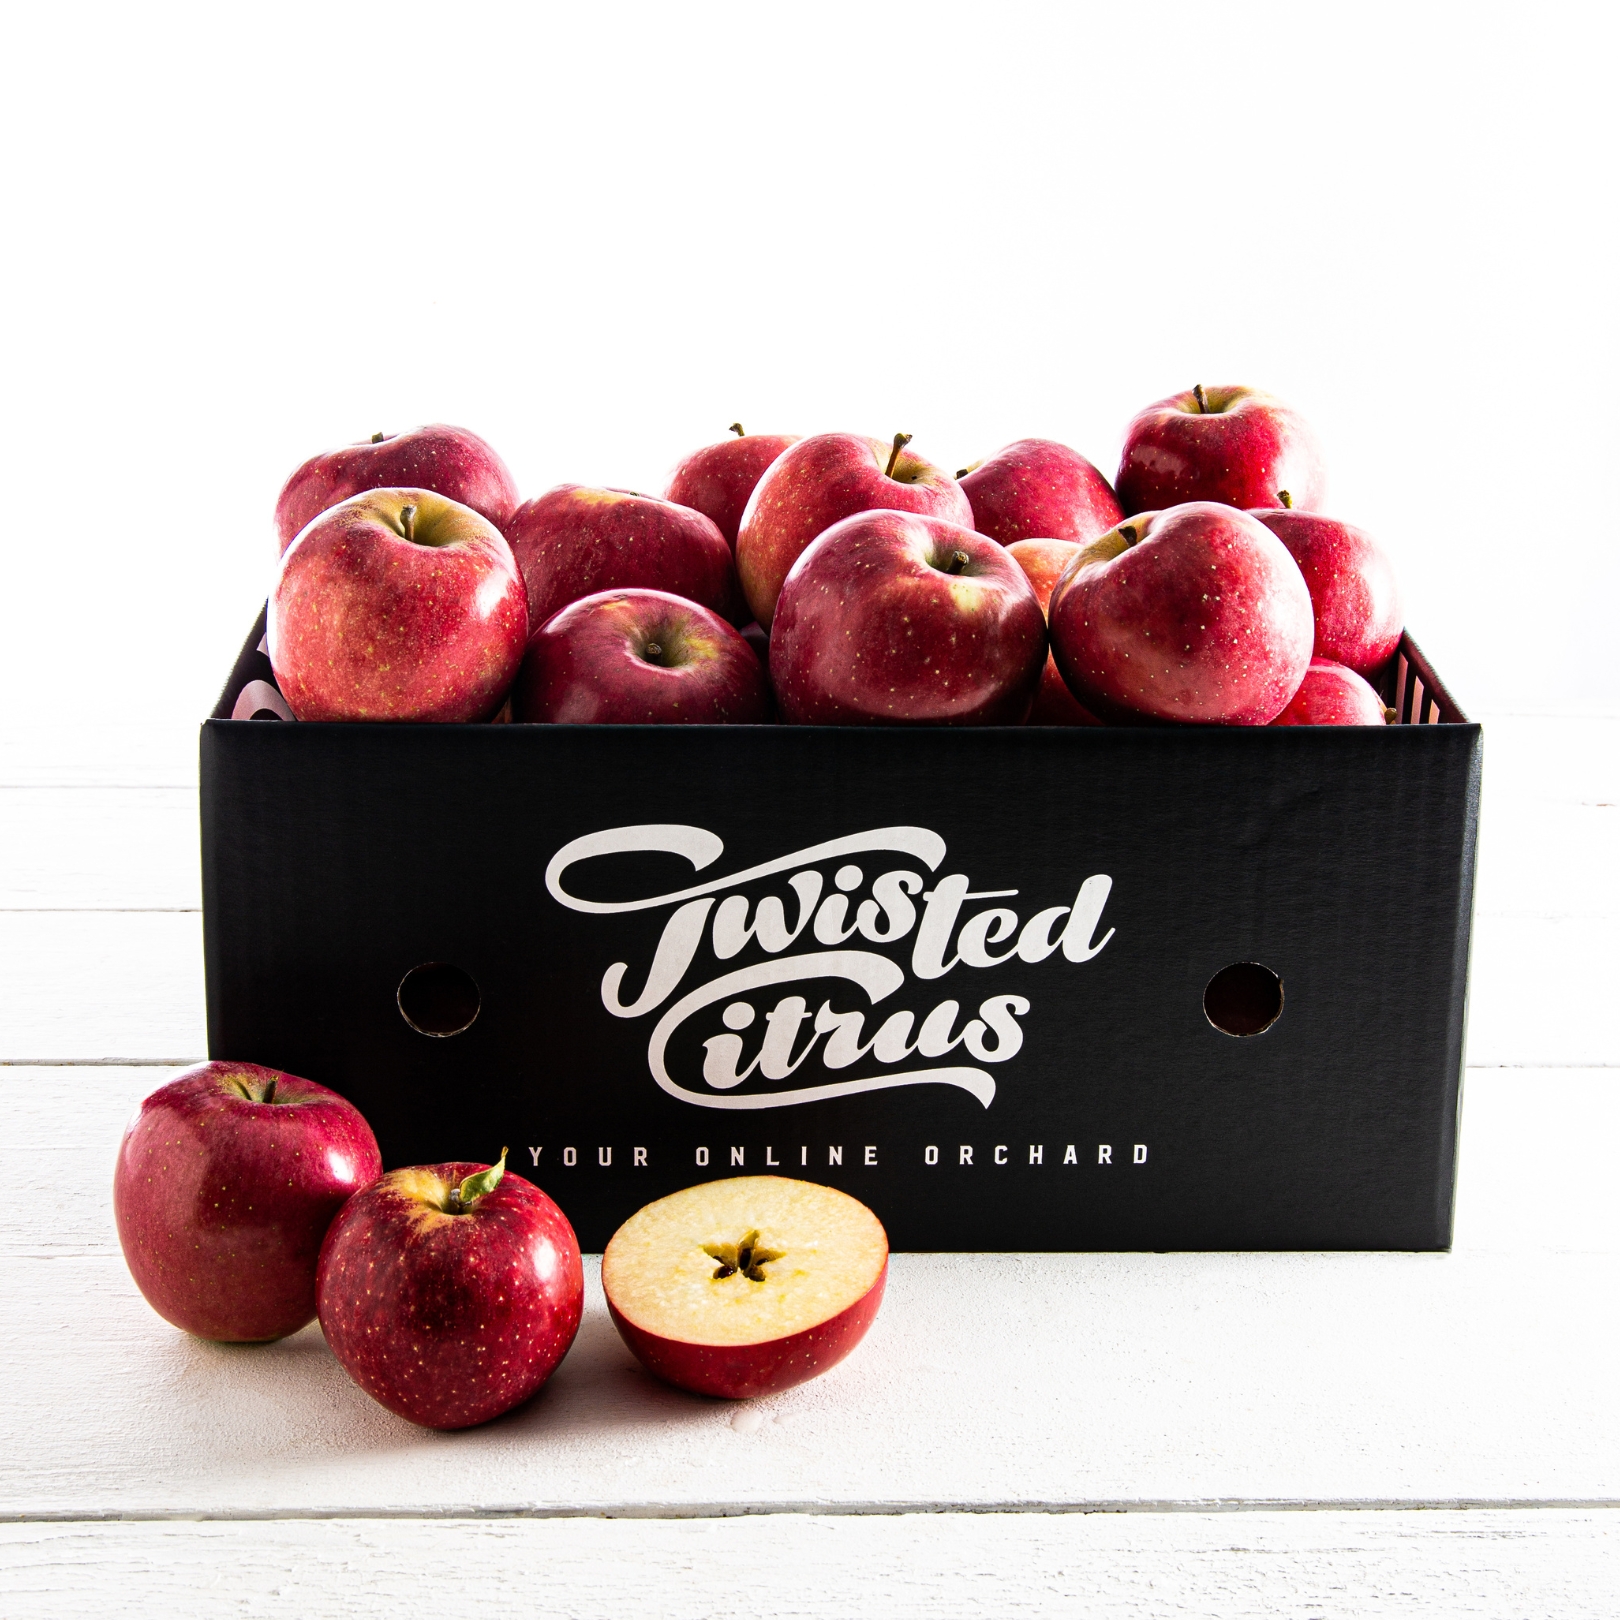 Buy Apples - Pacific Rose Online NZ